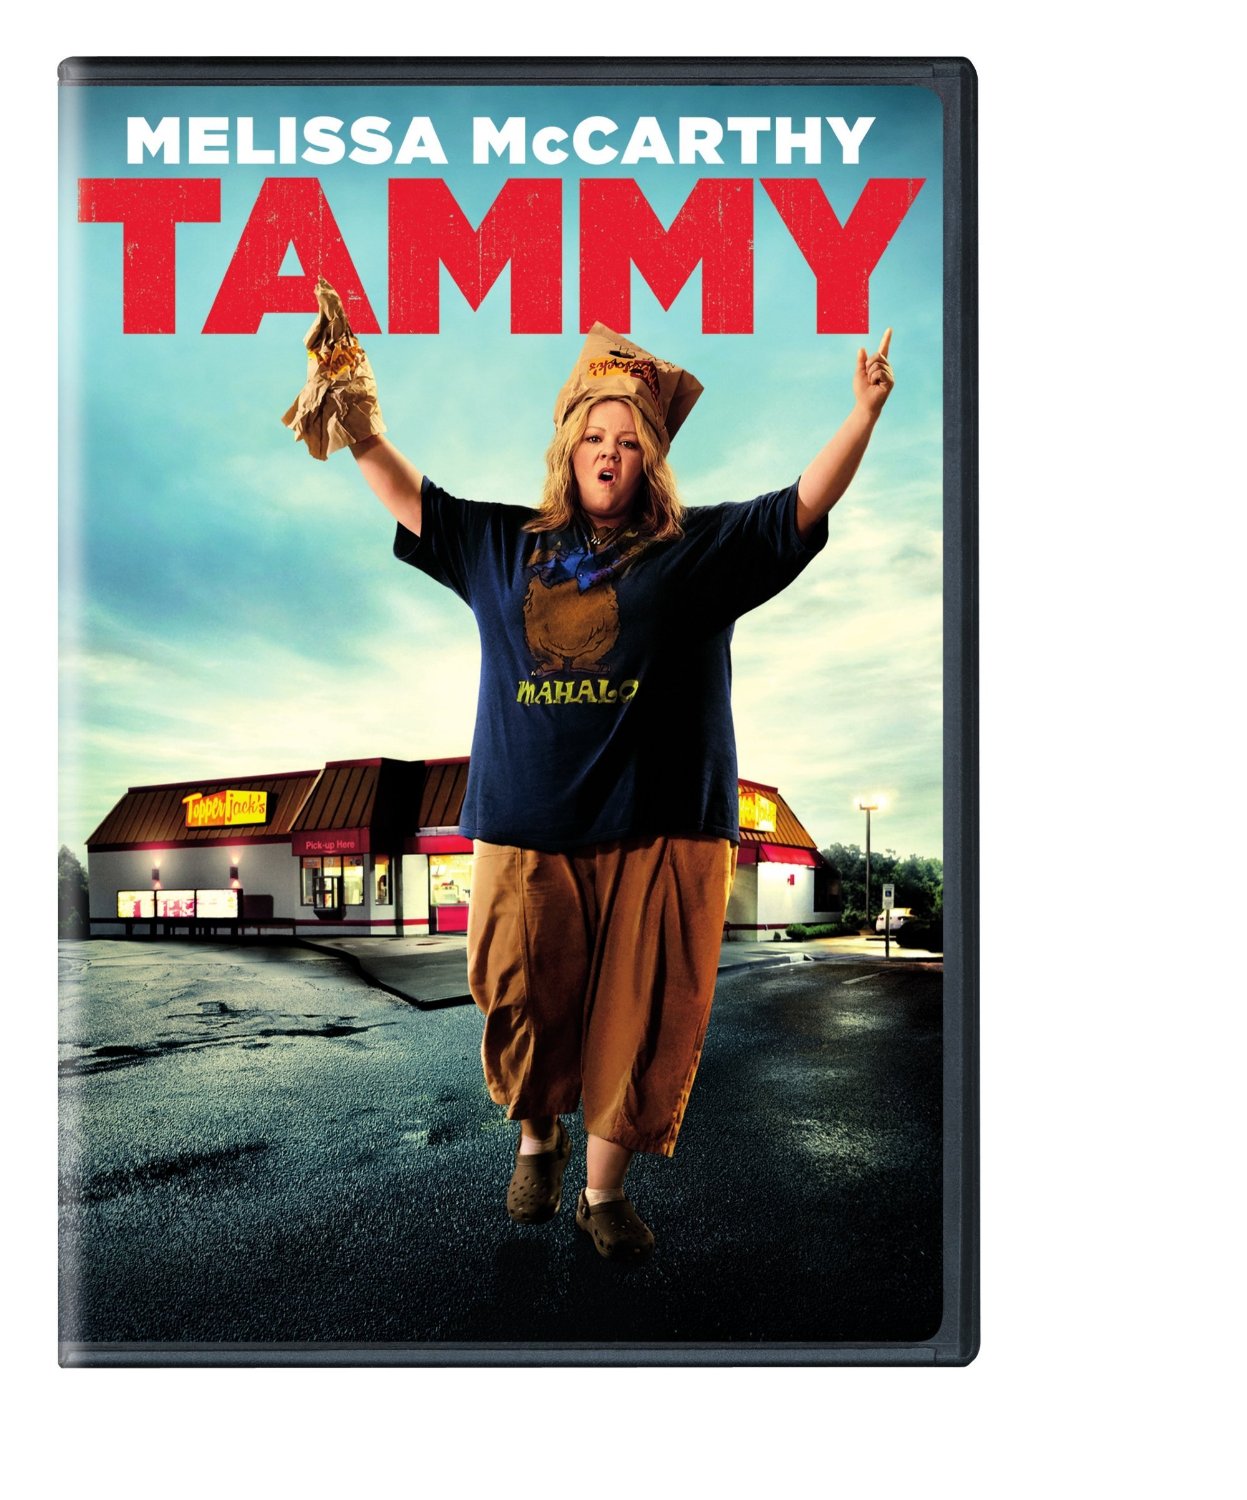 Tammy DVD Only $9.99 – 66% Savings!!